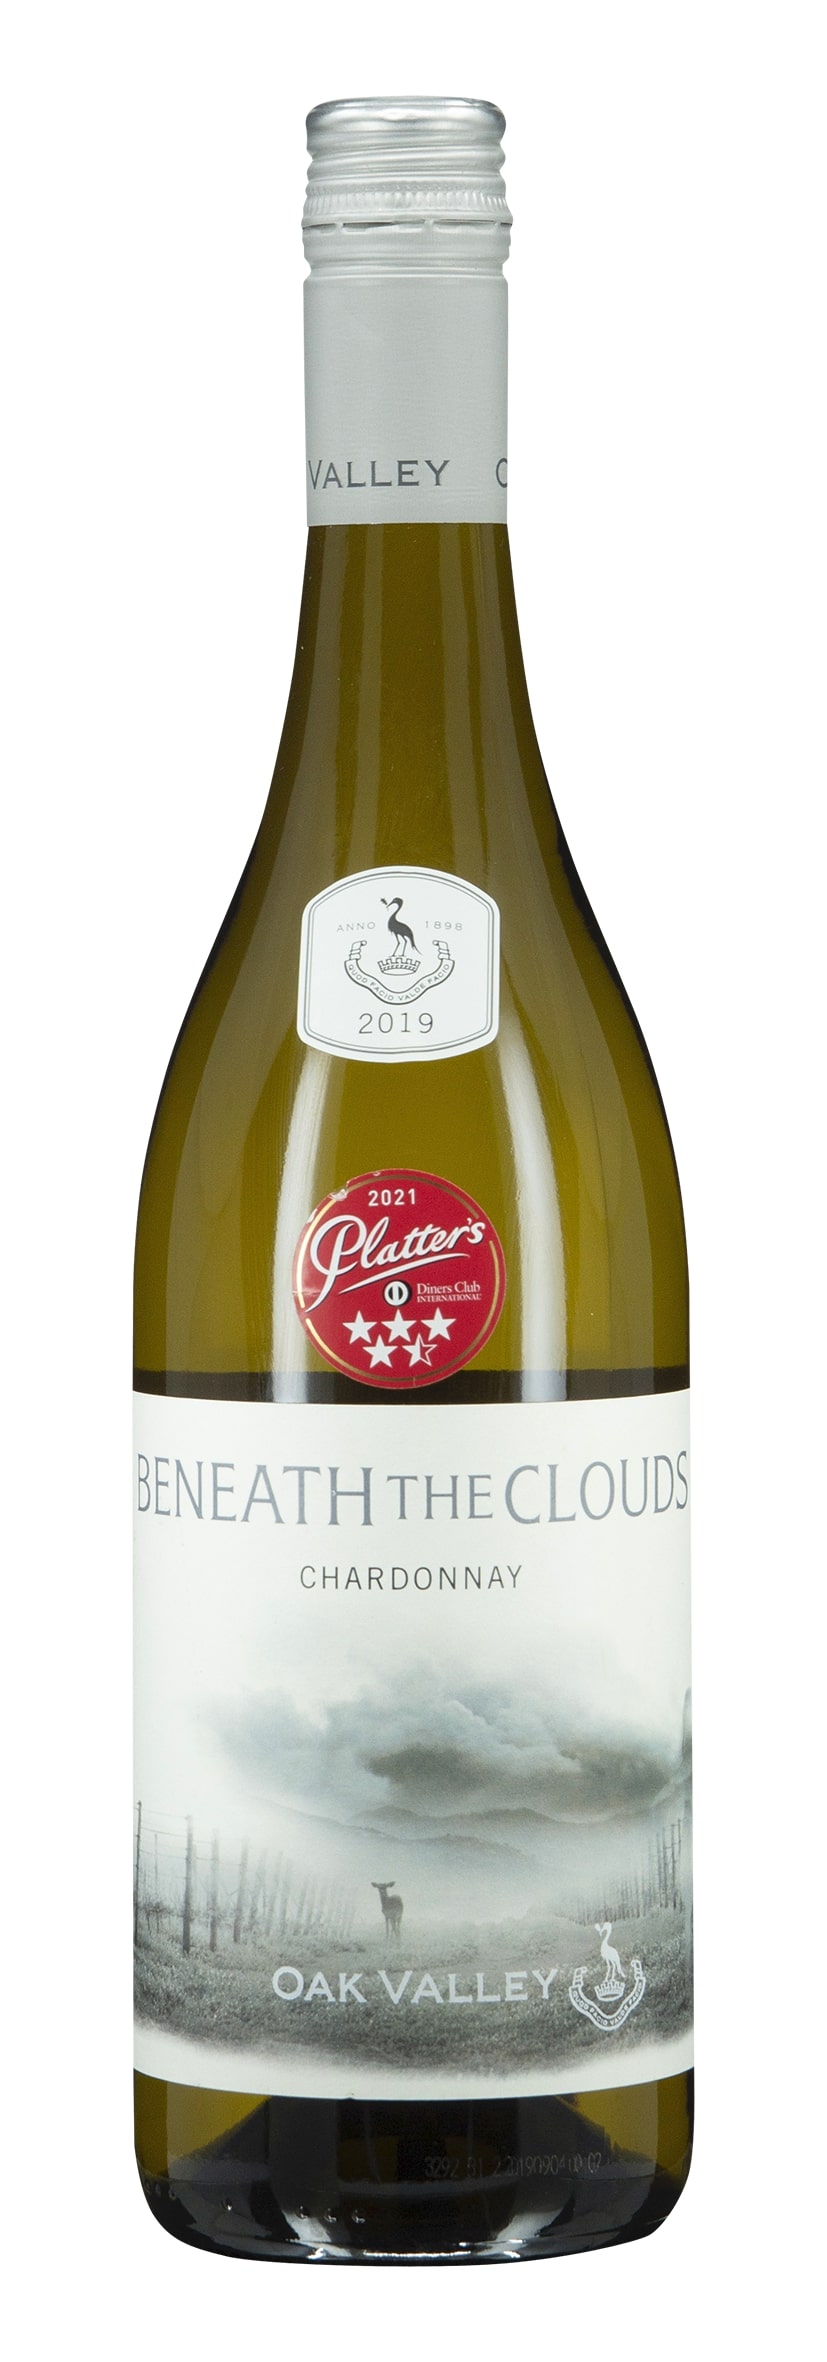 W.O. Cape South Coast Chardonnay Beneath the Clouds 2019